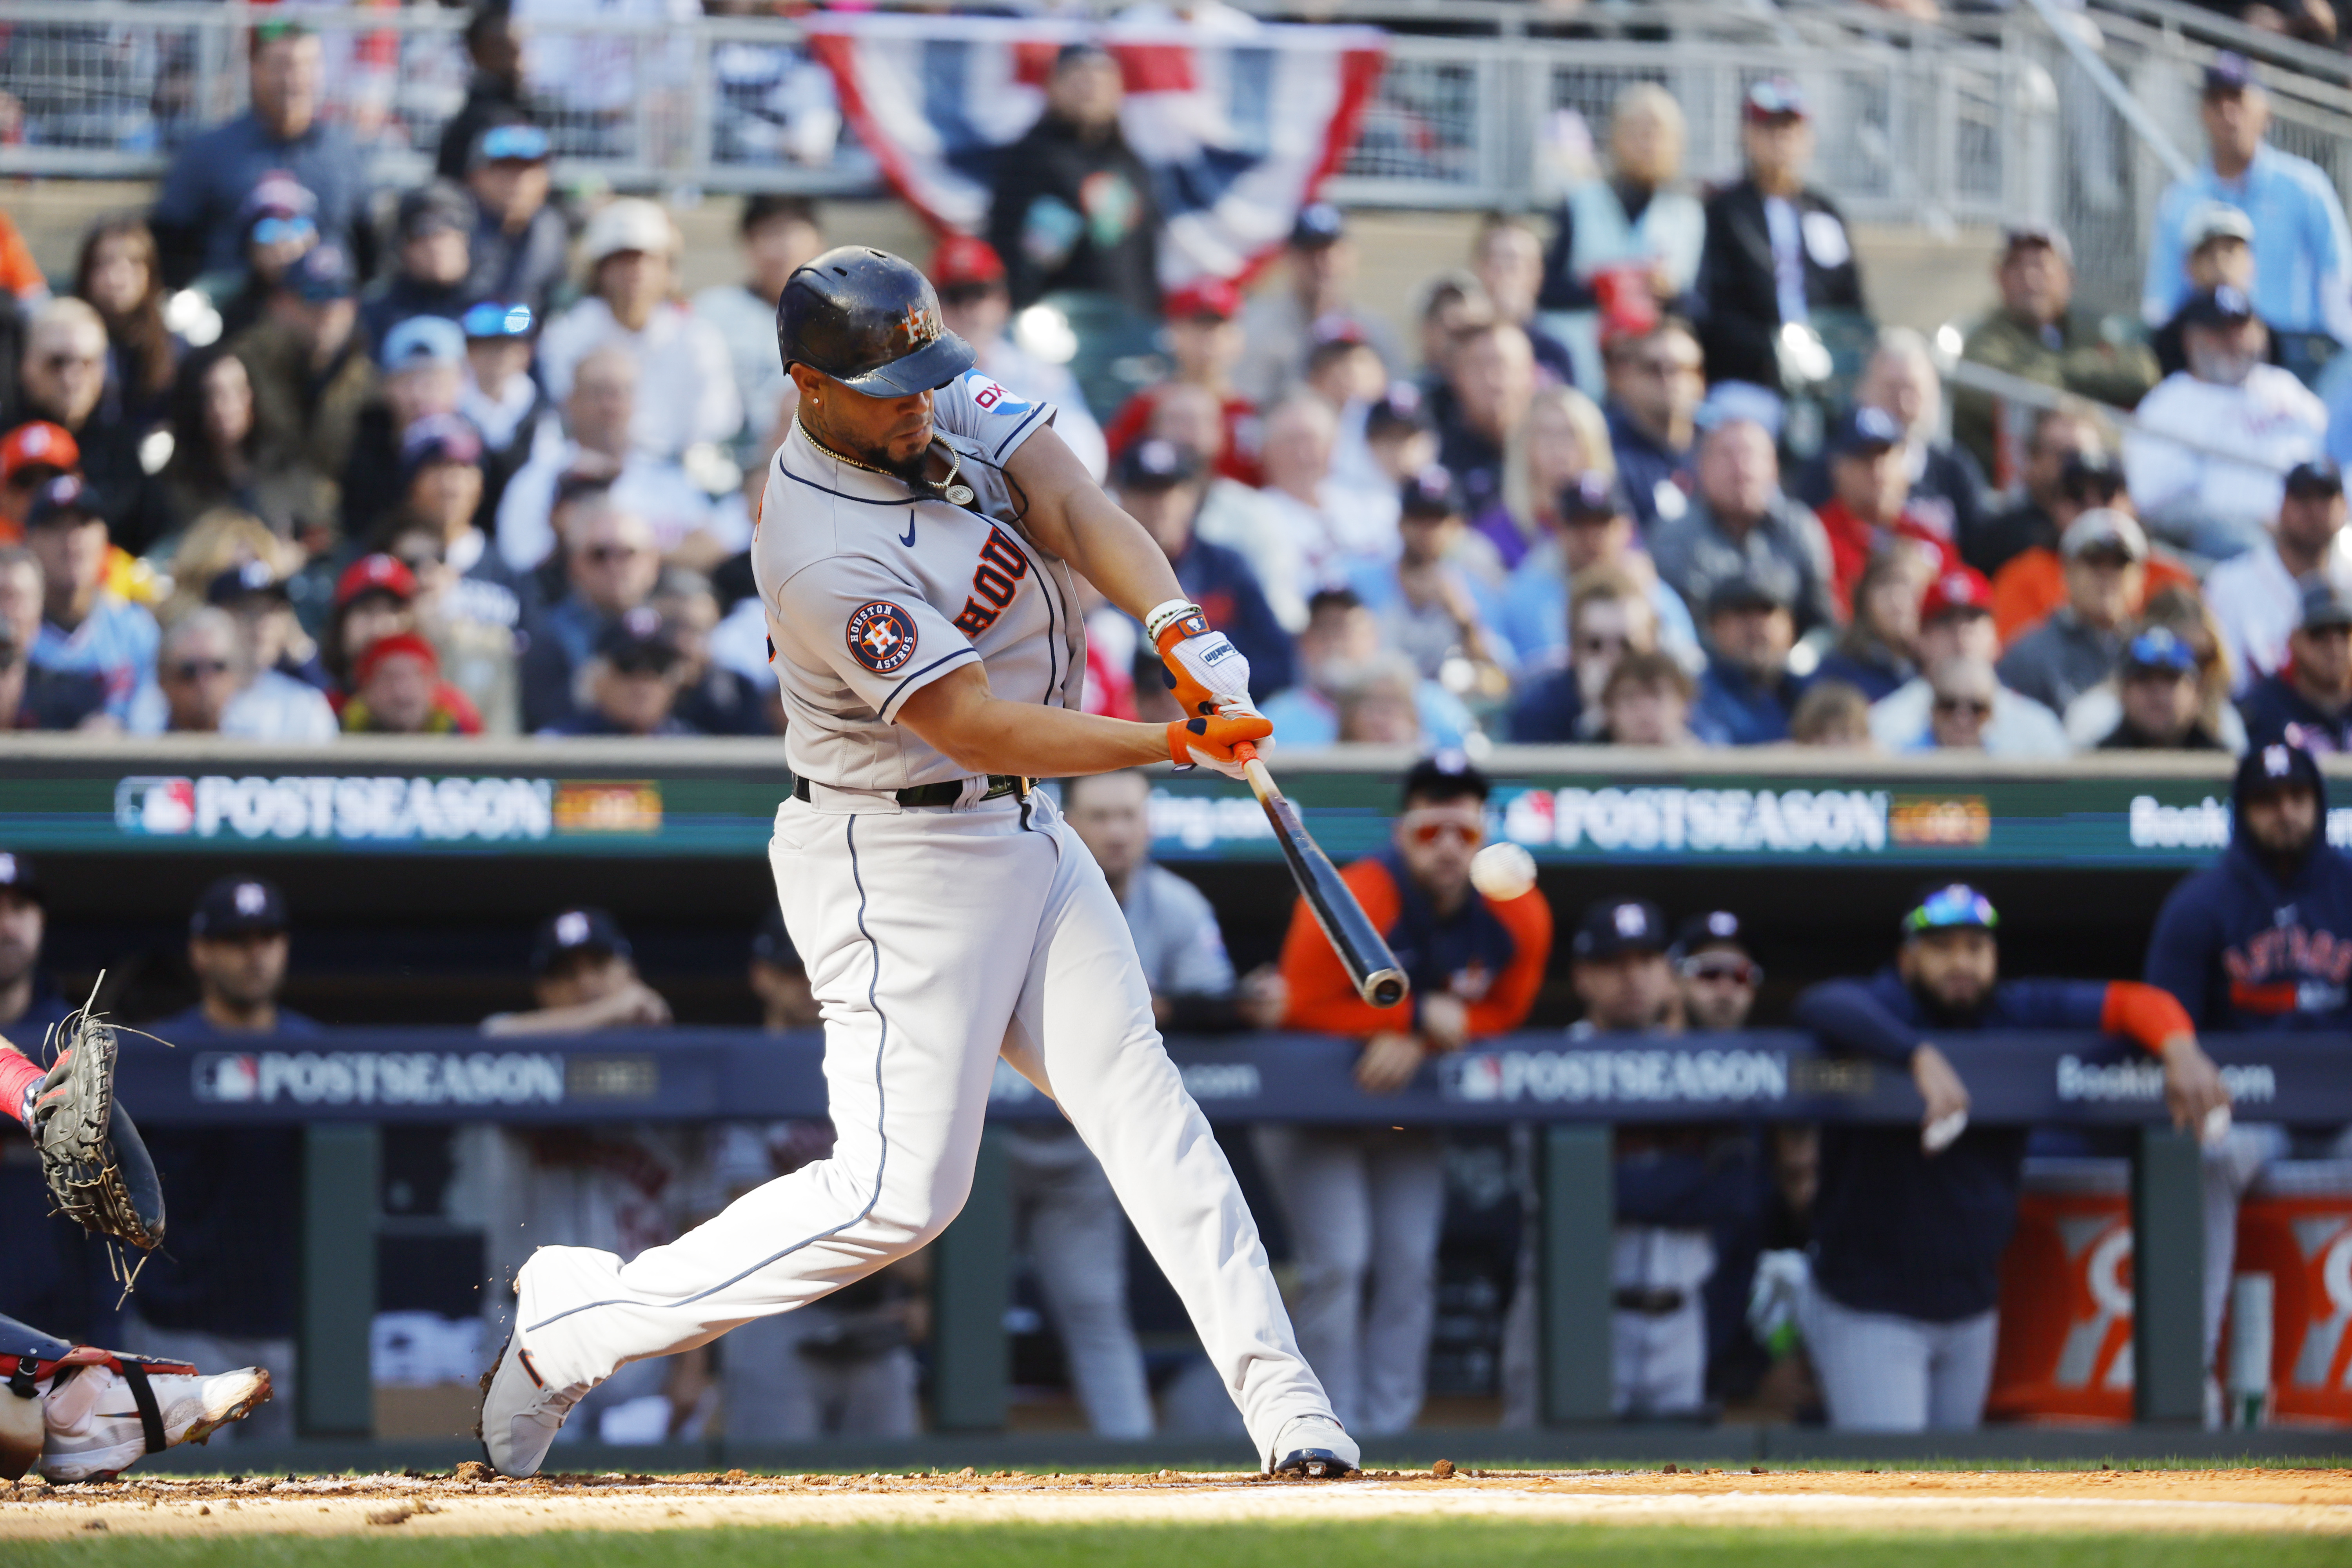 Alex Bregman Game-Used Jersey- MLB Record for Postseason Home Runs